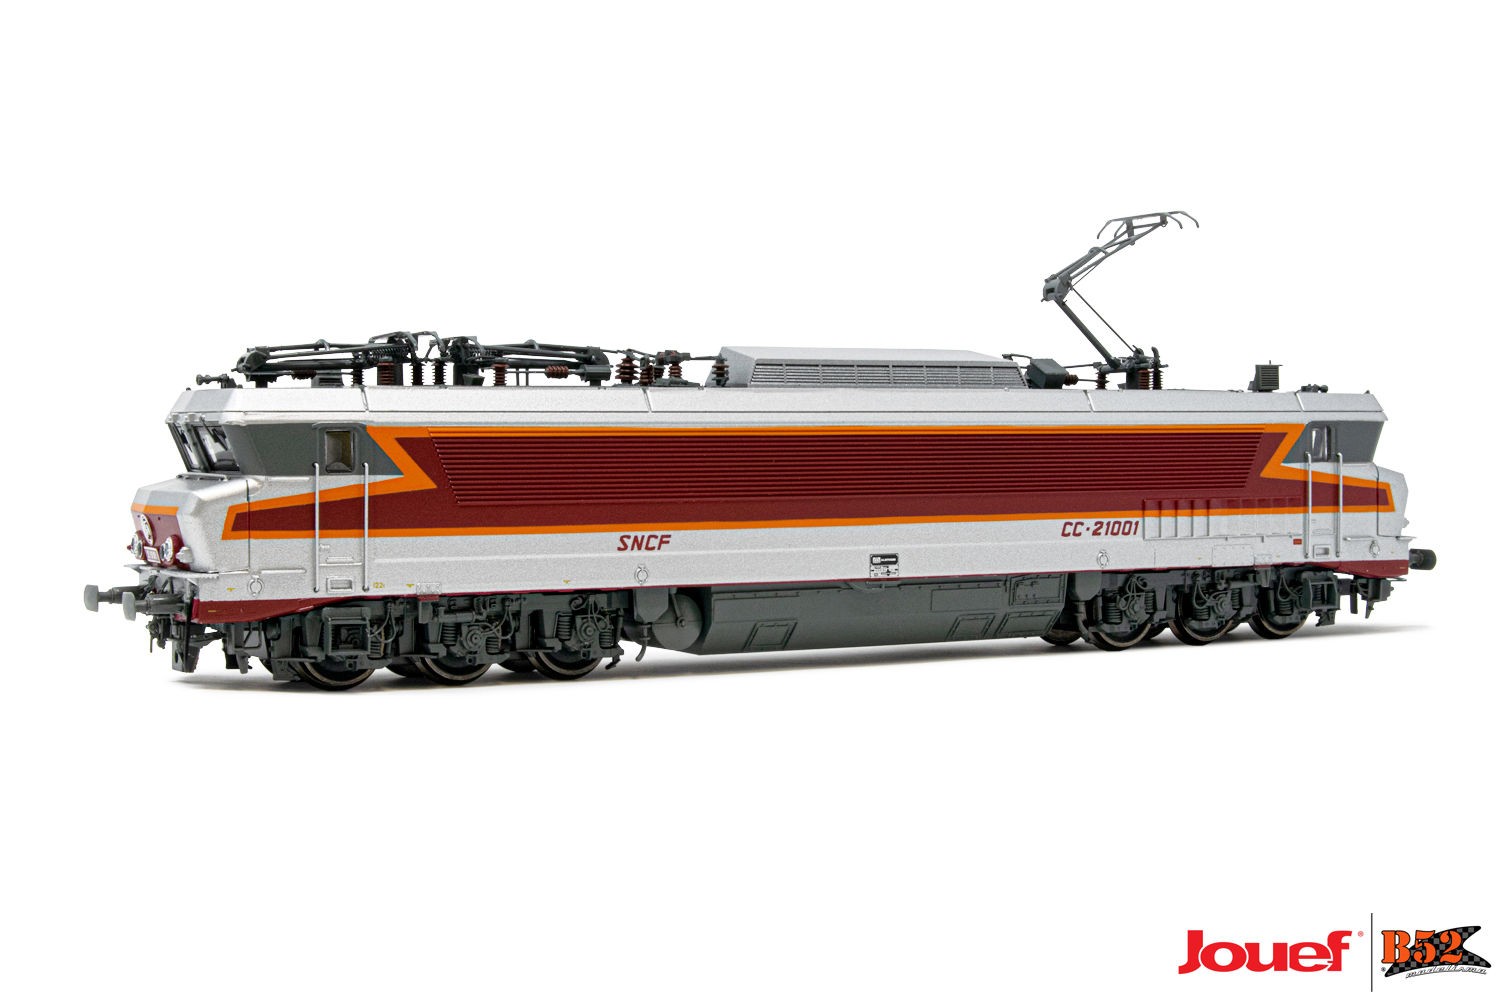 Jouef HO - Locomotiva Elétrica CC 21001, SNCF - DCC: HJ2373S